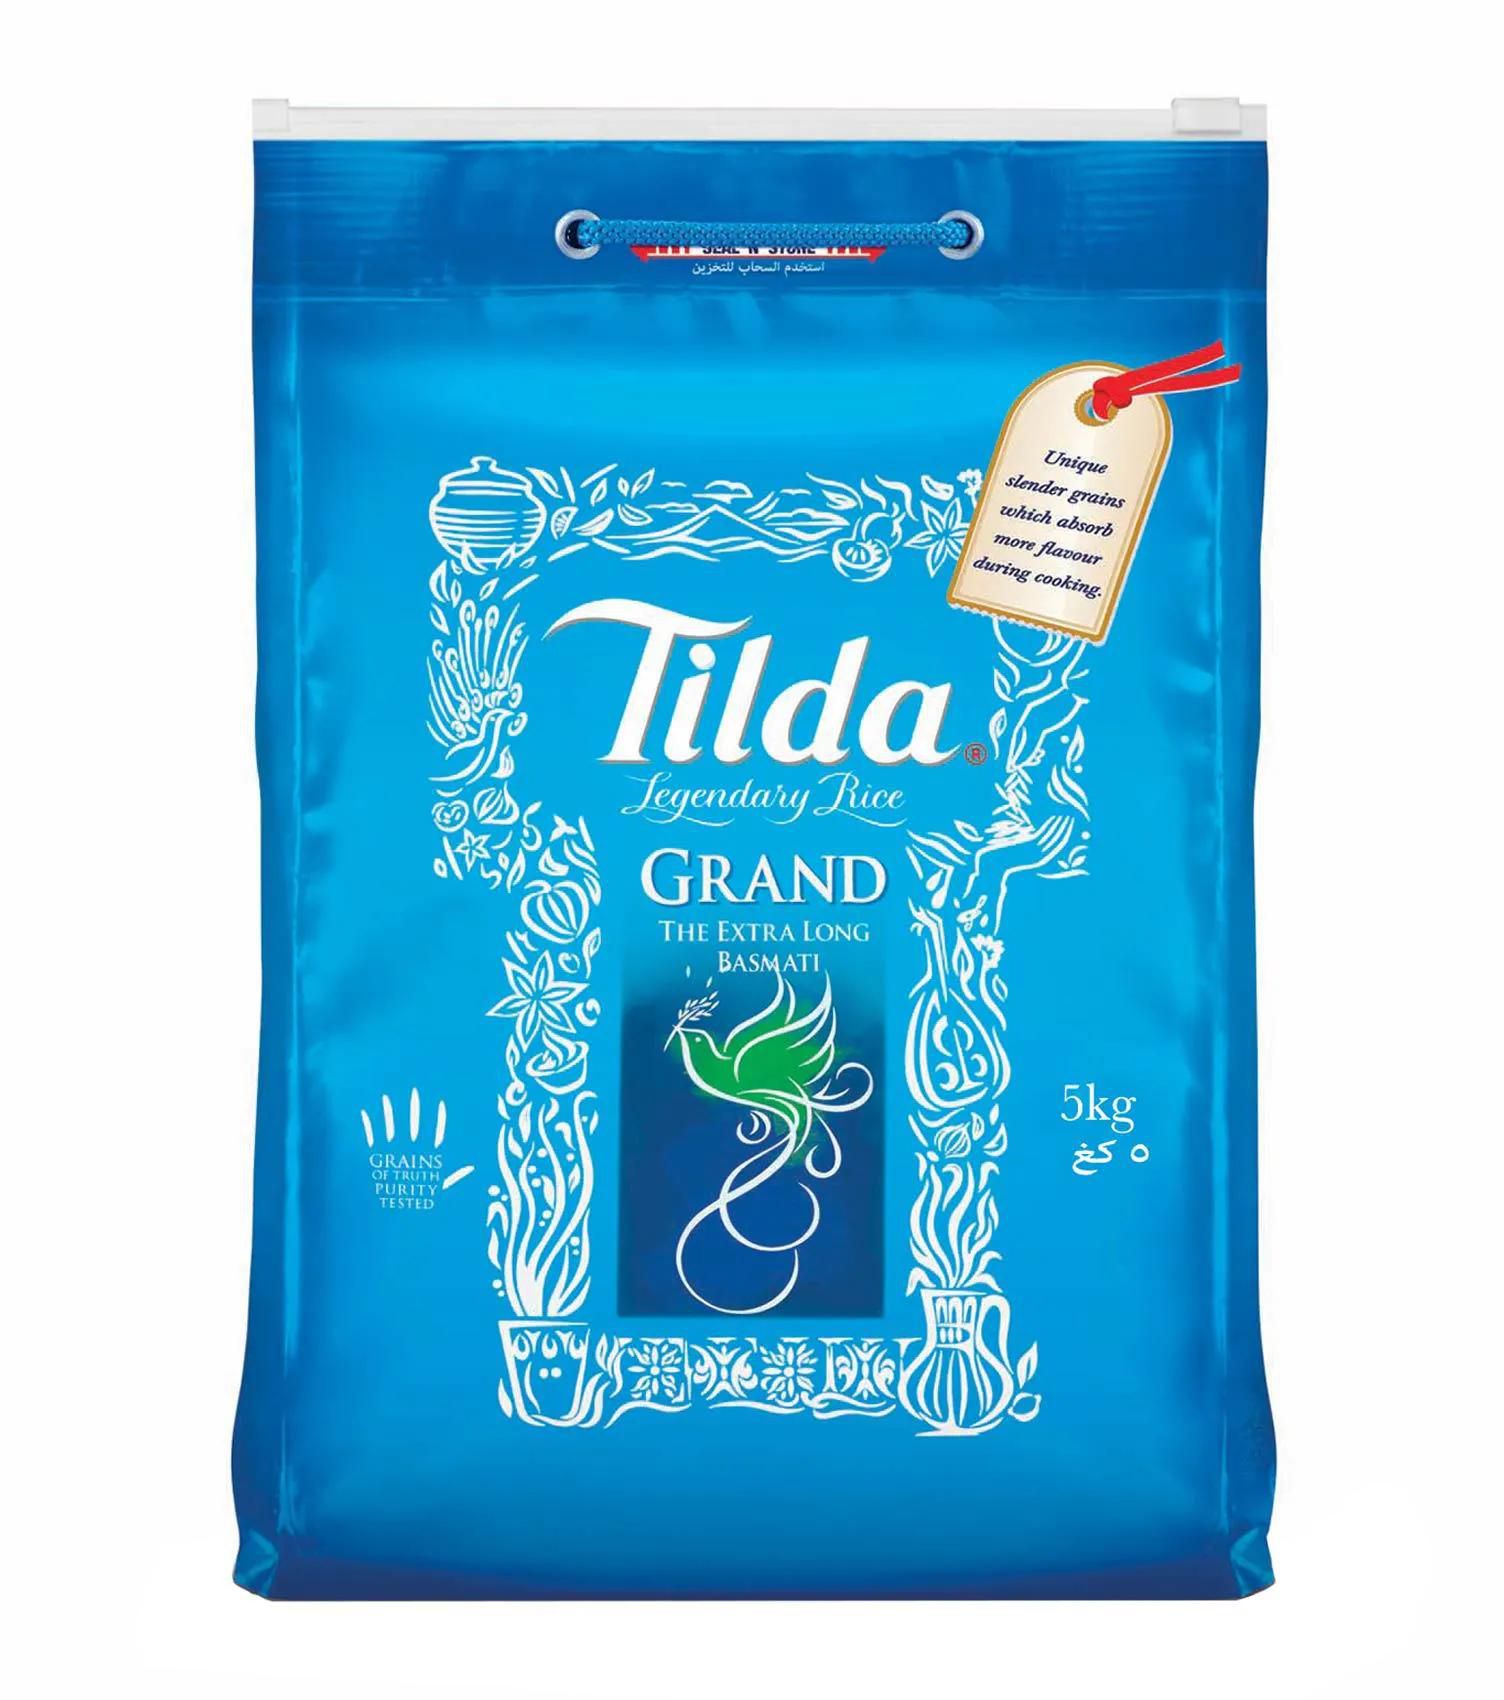 Tilda grand rice 5 kg